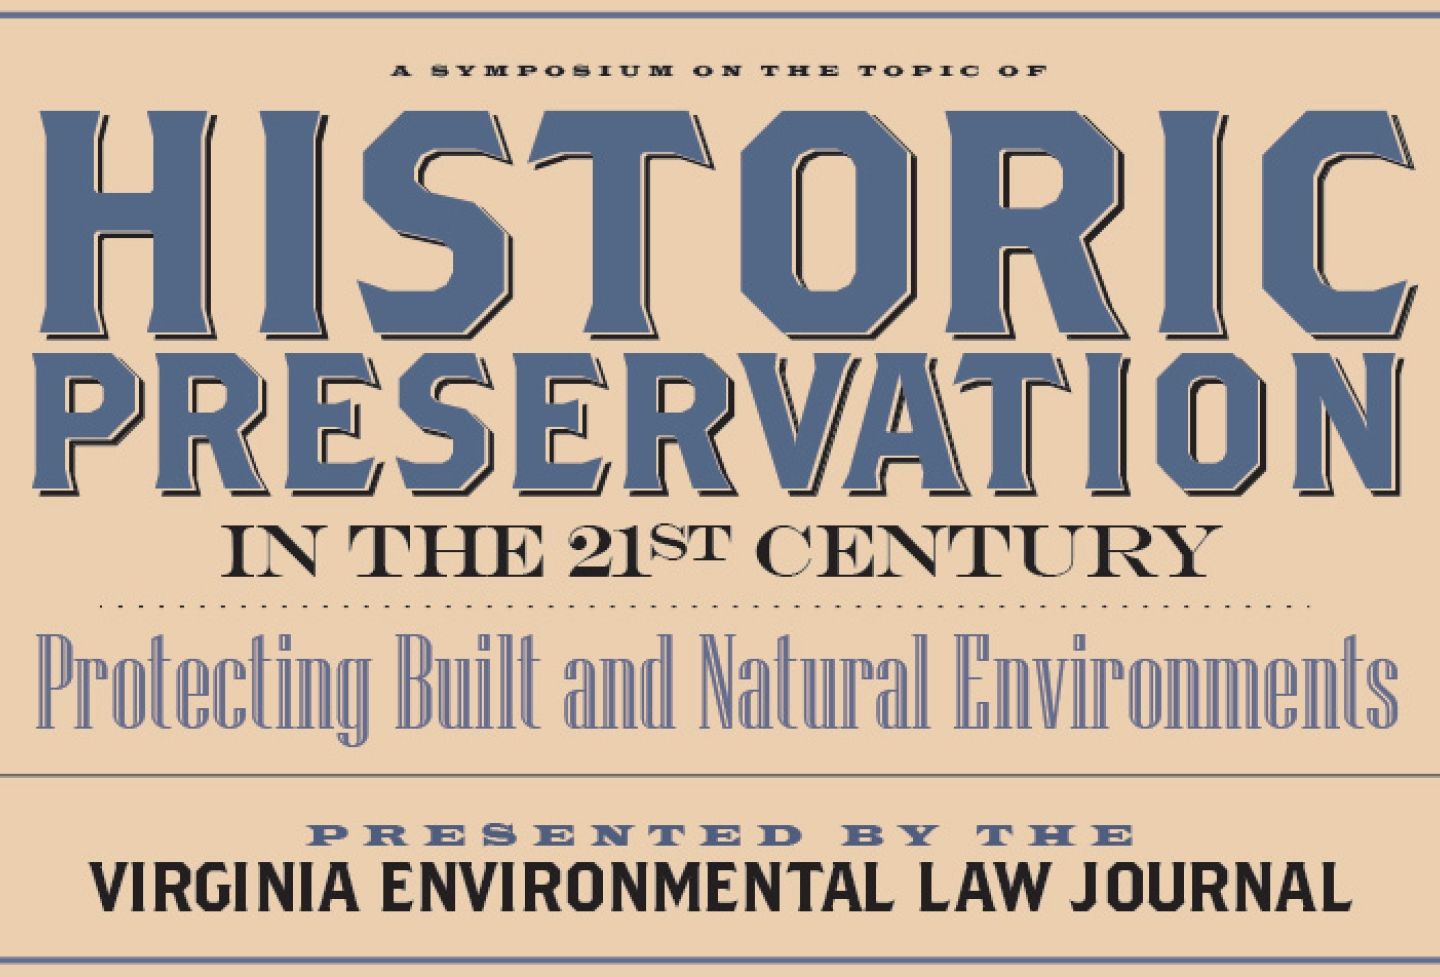 Virginia Environmental Law Journal symposium